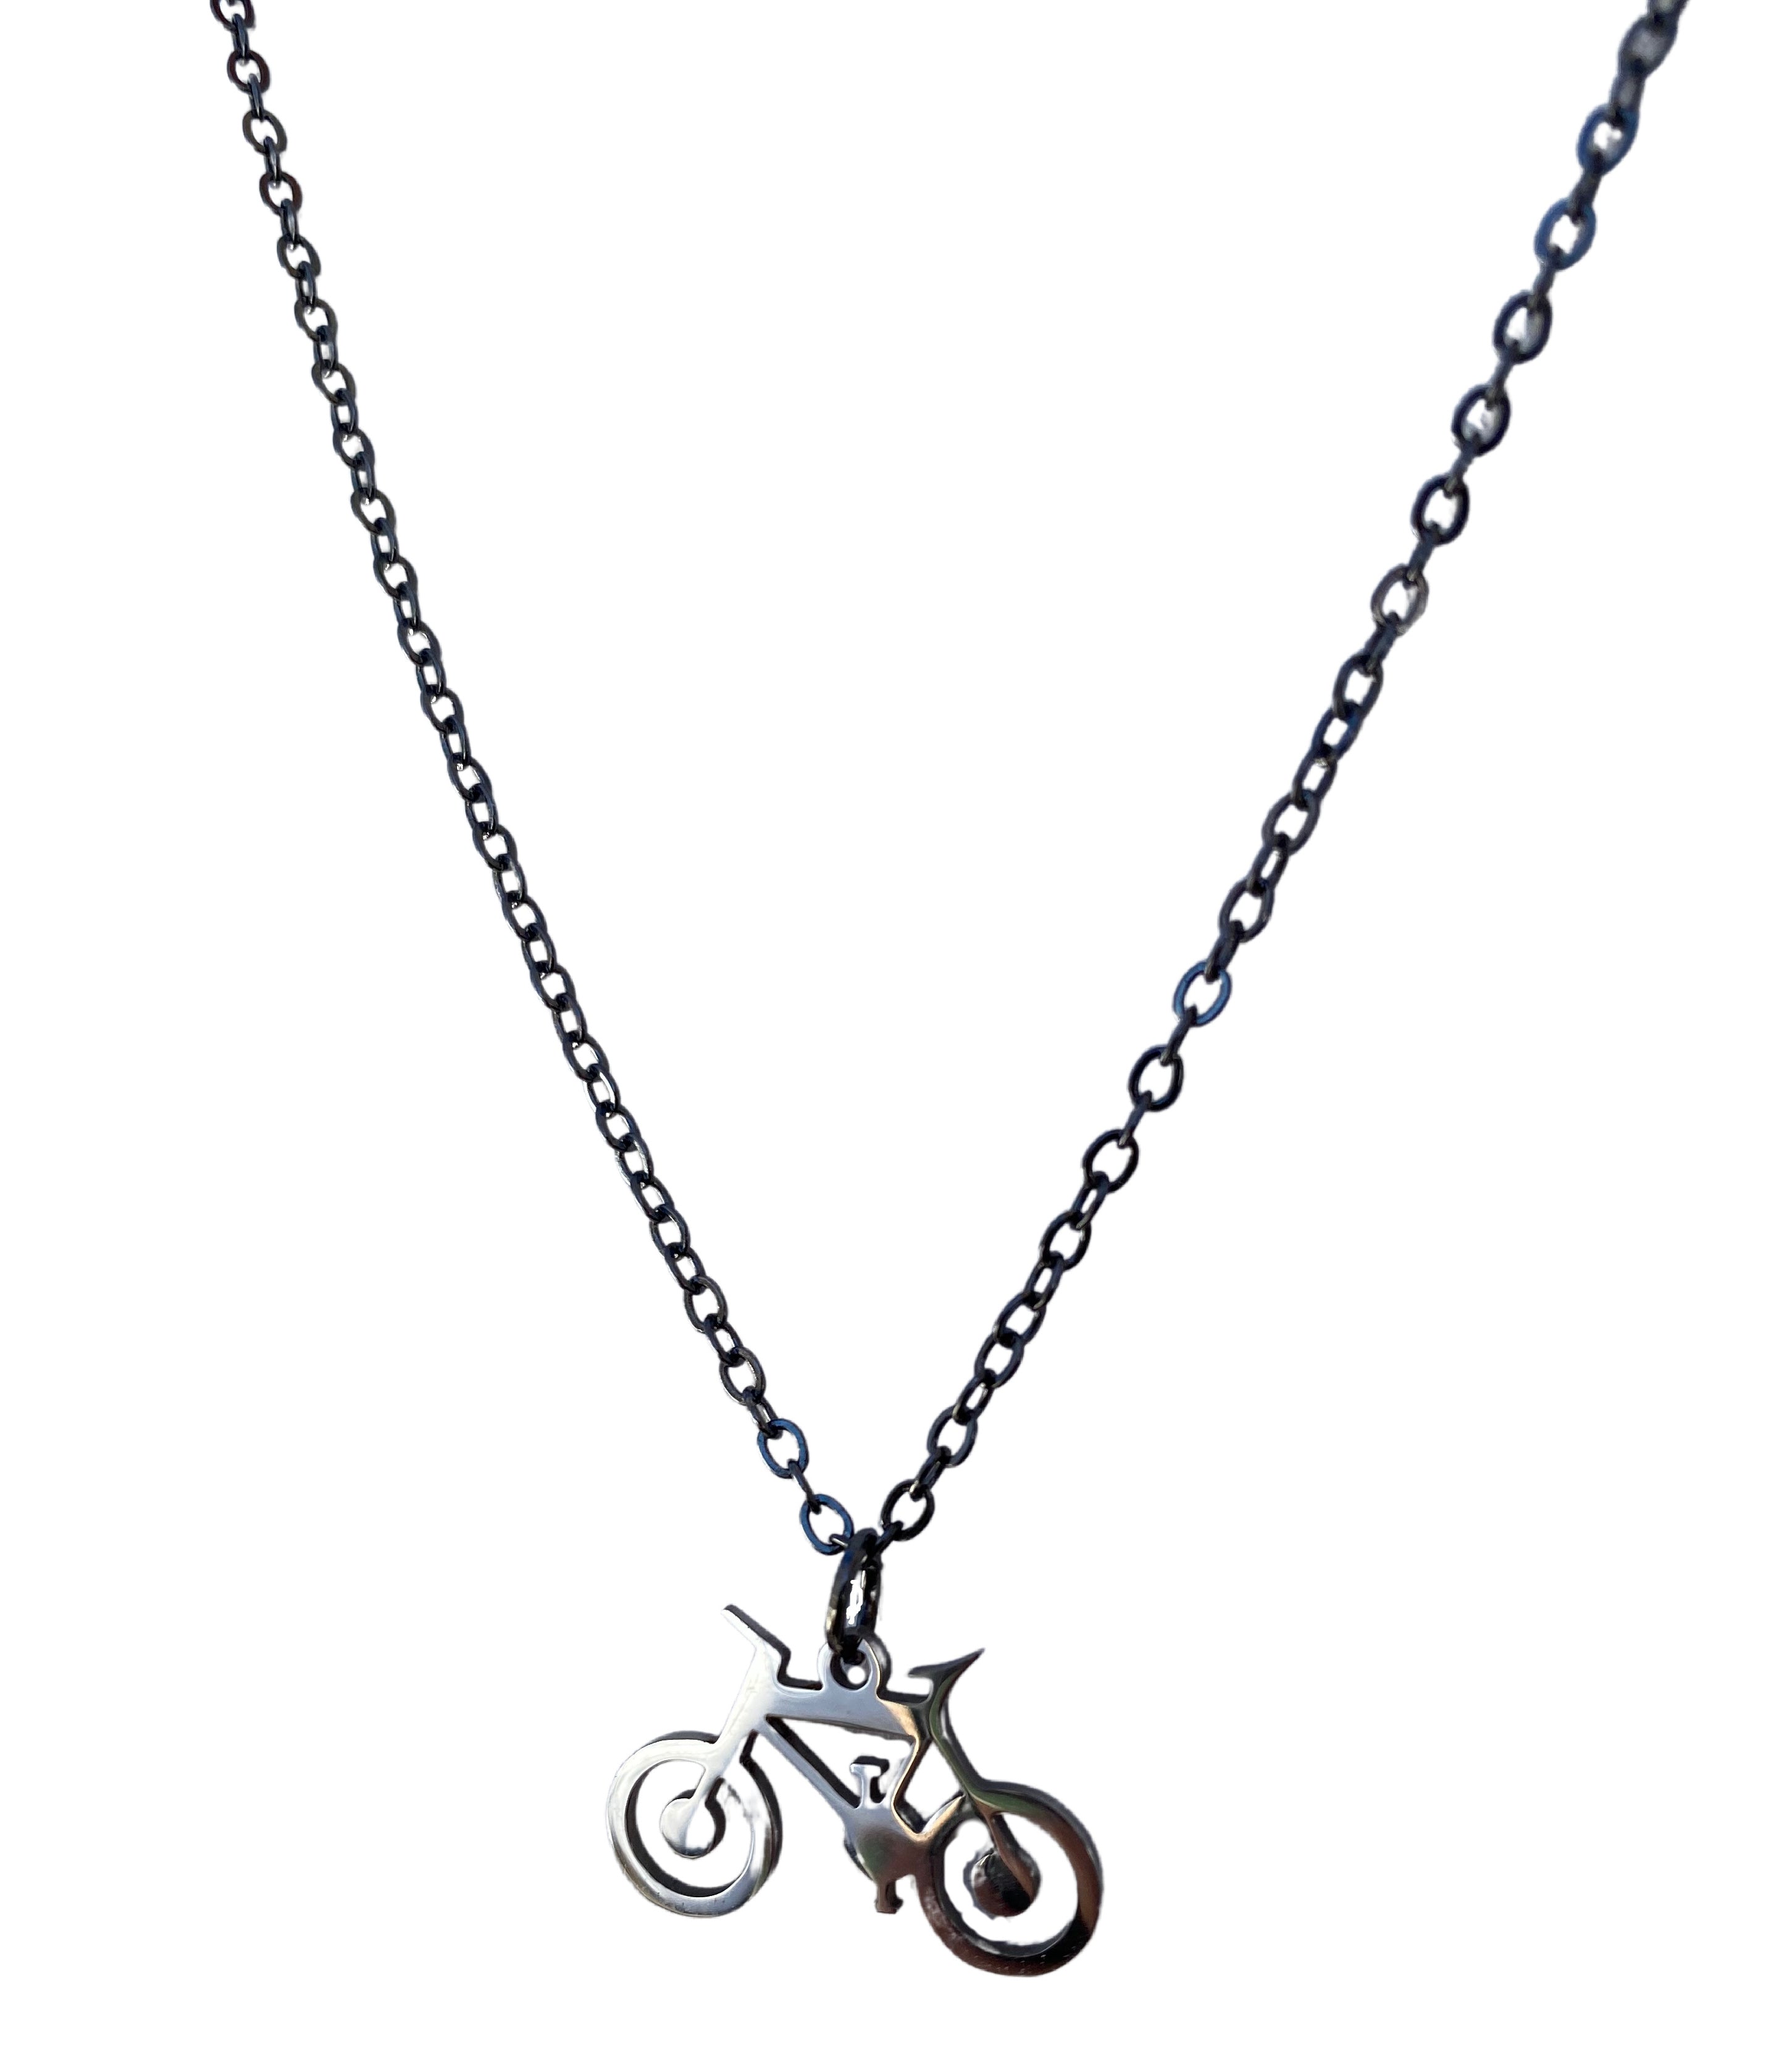 Bike Necklace